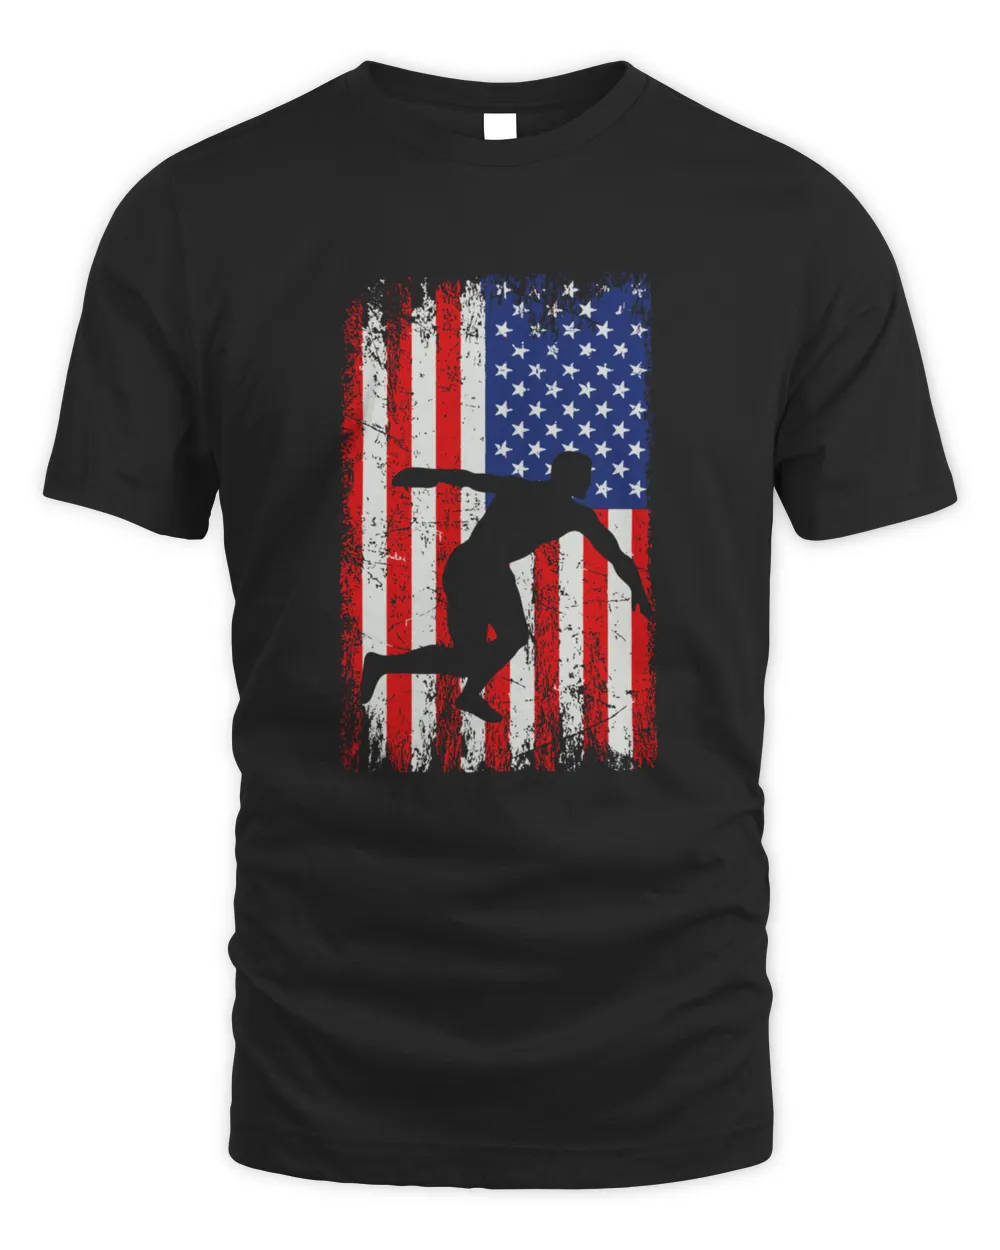 Discus Throw American Flag Discus Throw4417 T-Shirt